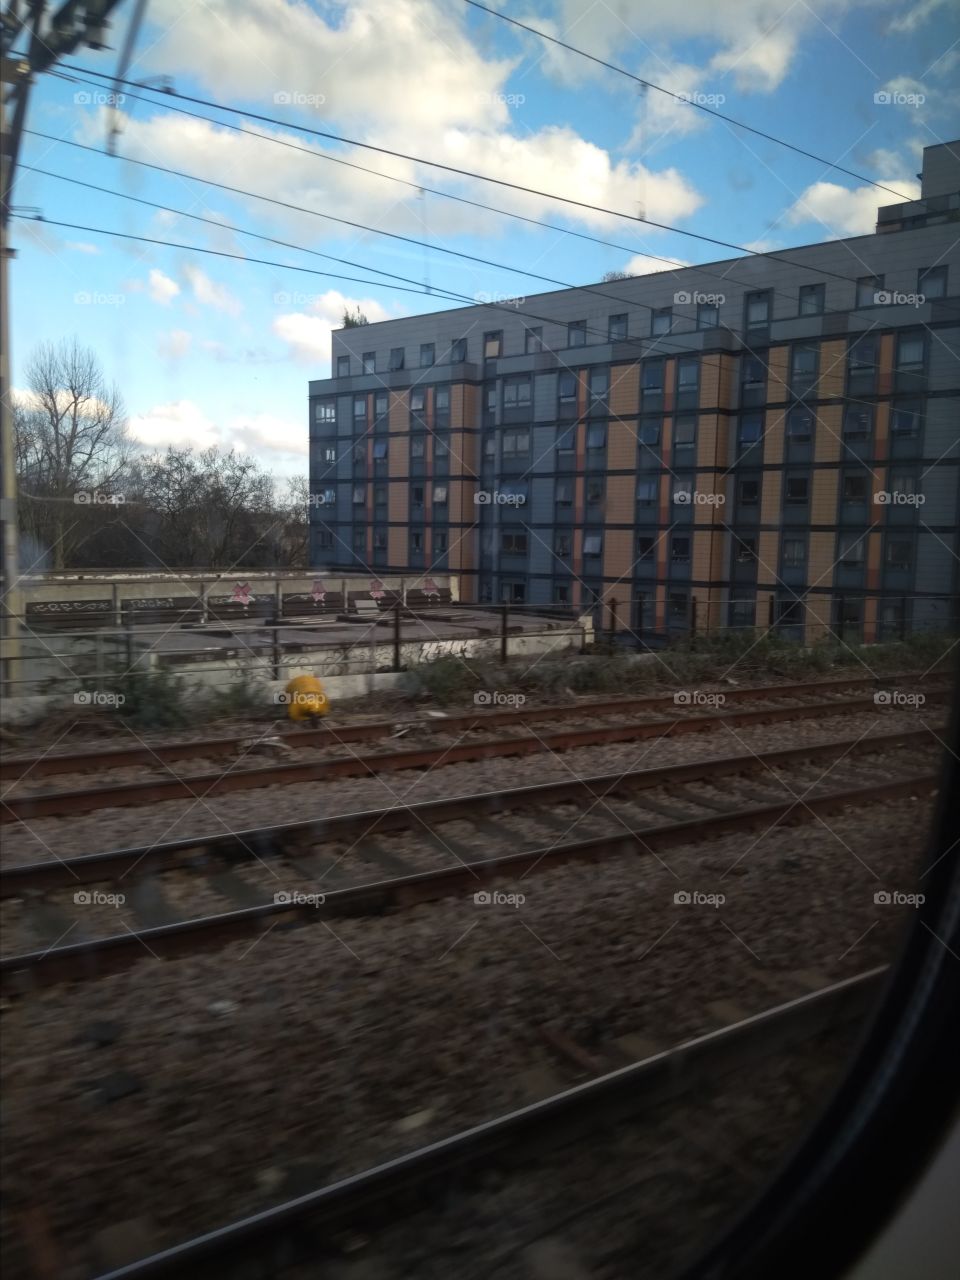 Train Track View, London, United Kingdom